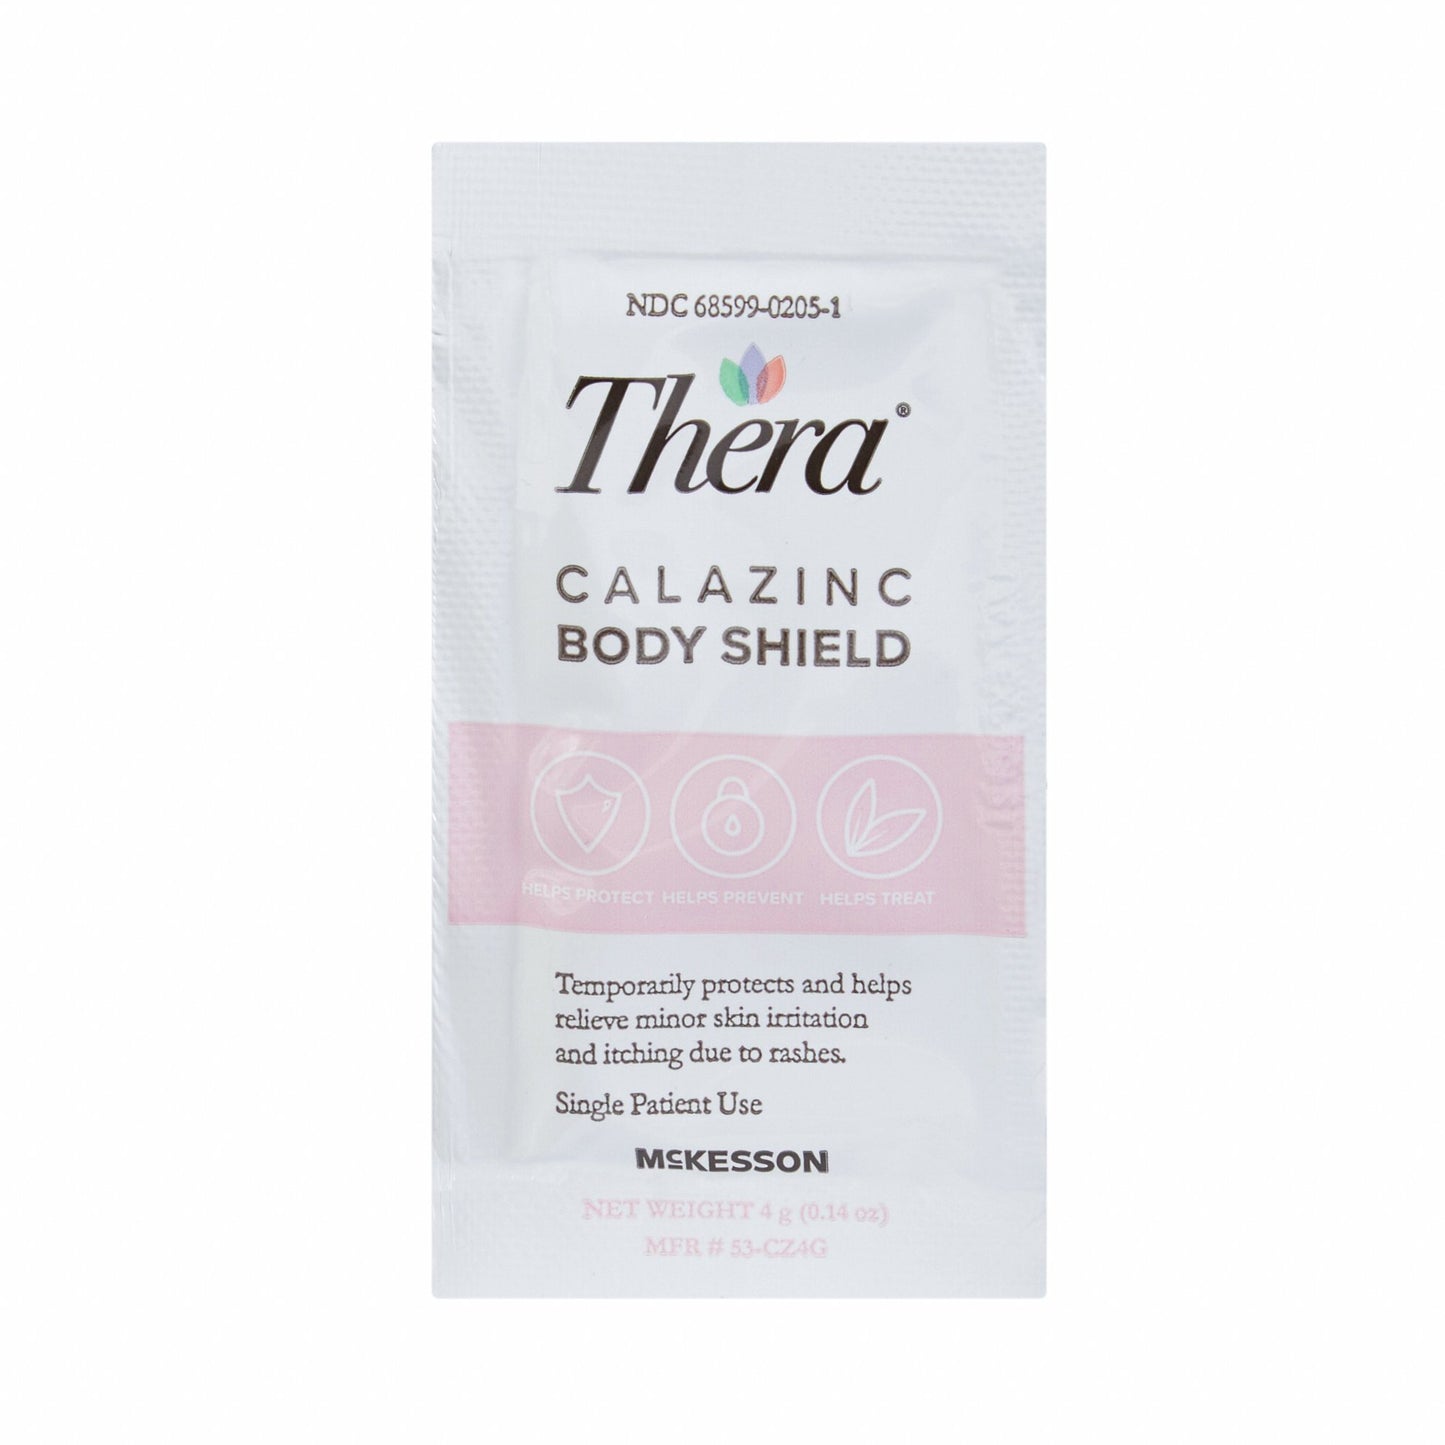 Thera Calazinc Body Shield Skin Protectant, 4 grams, 144 ct